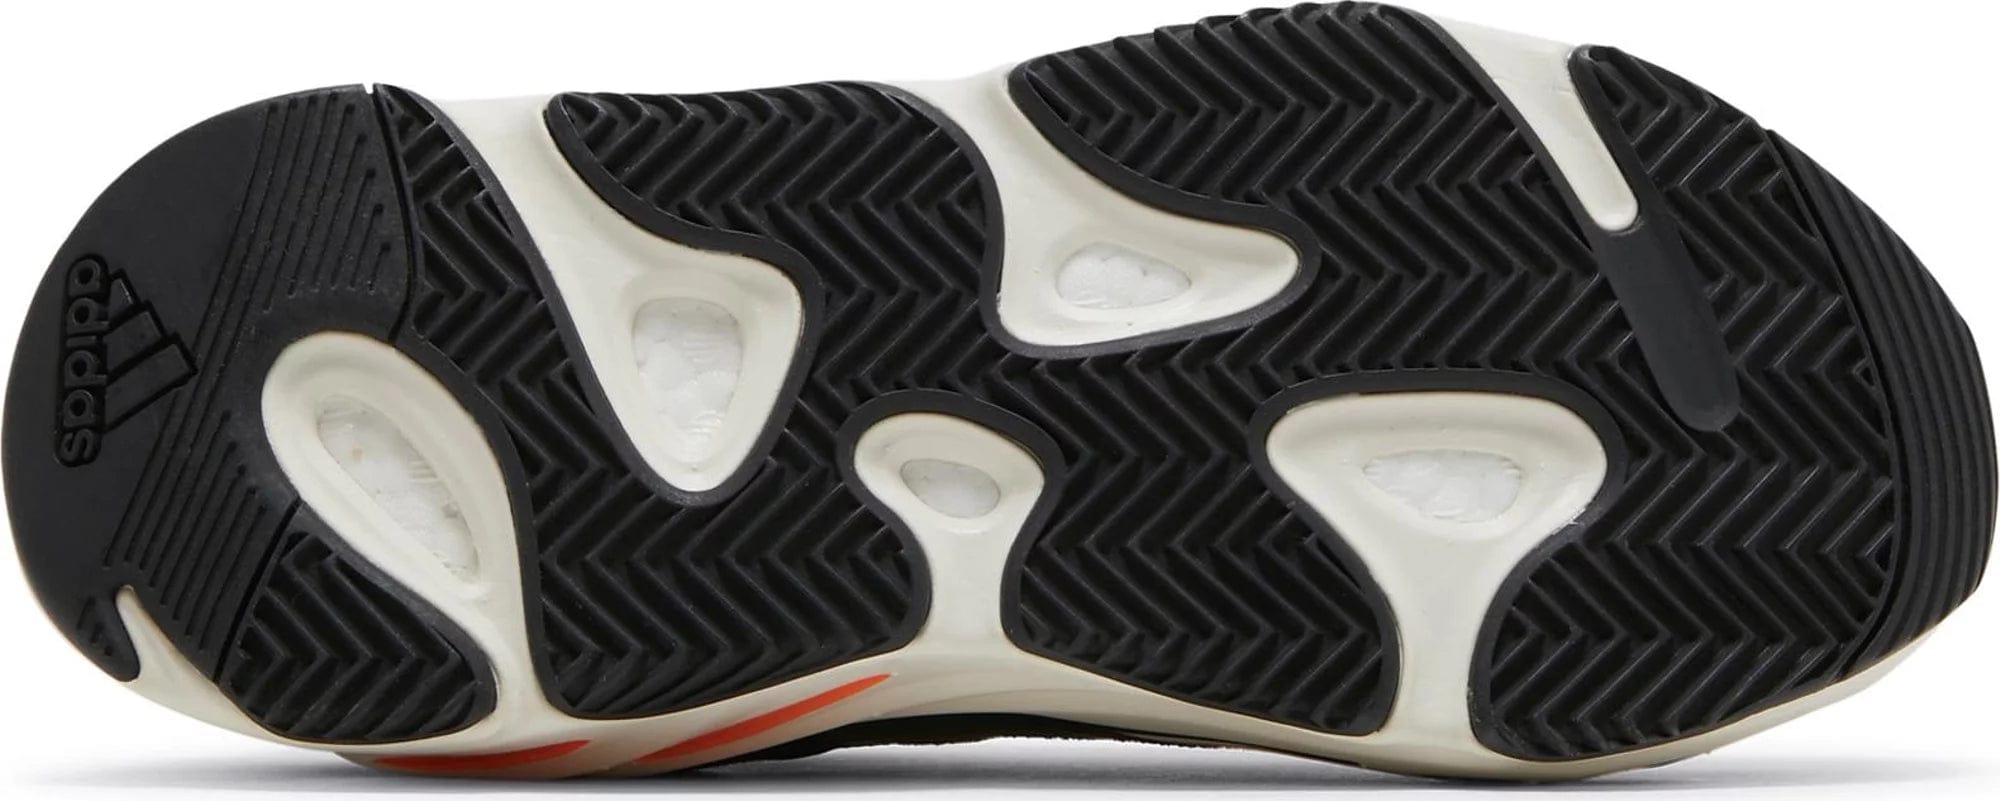 sneakers adidas Yeezy Boost 700 Wave Runner